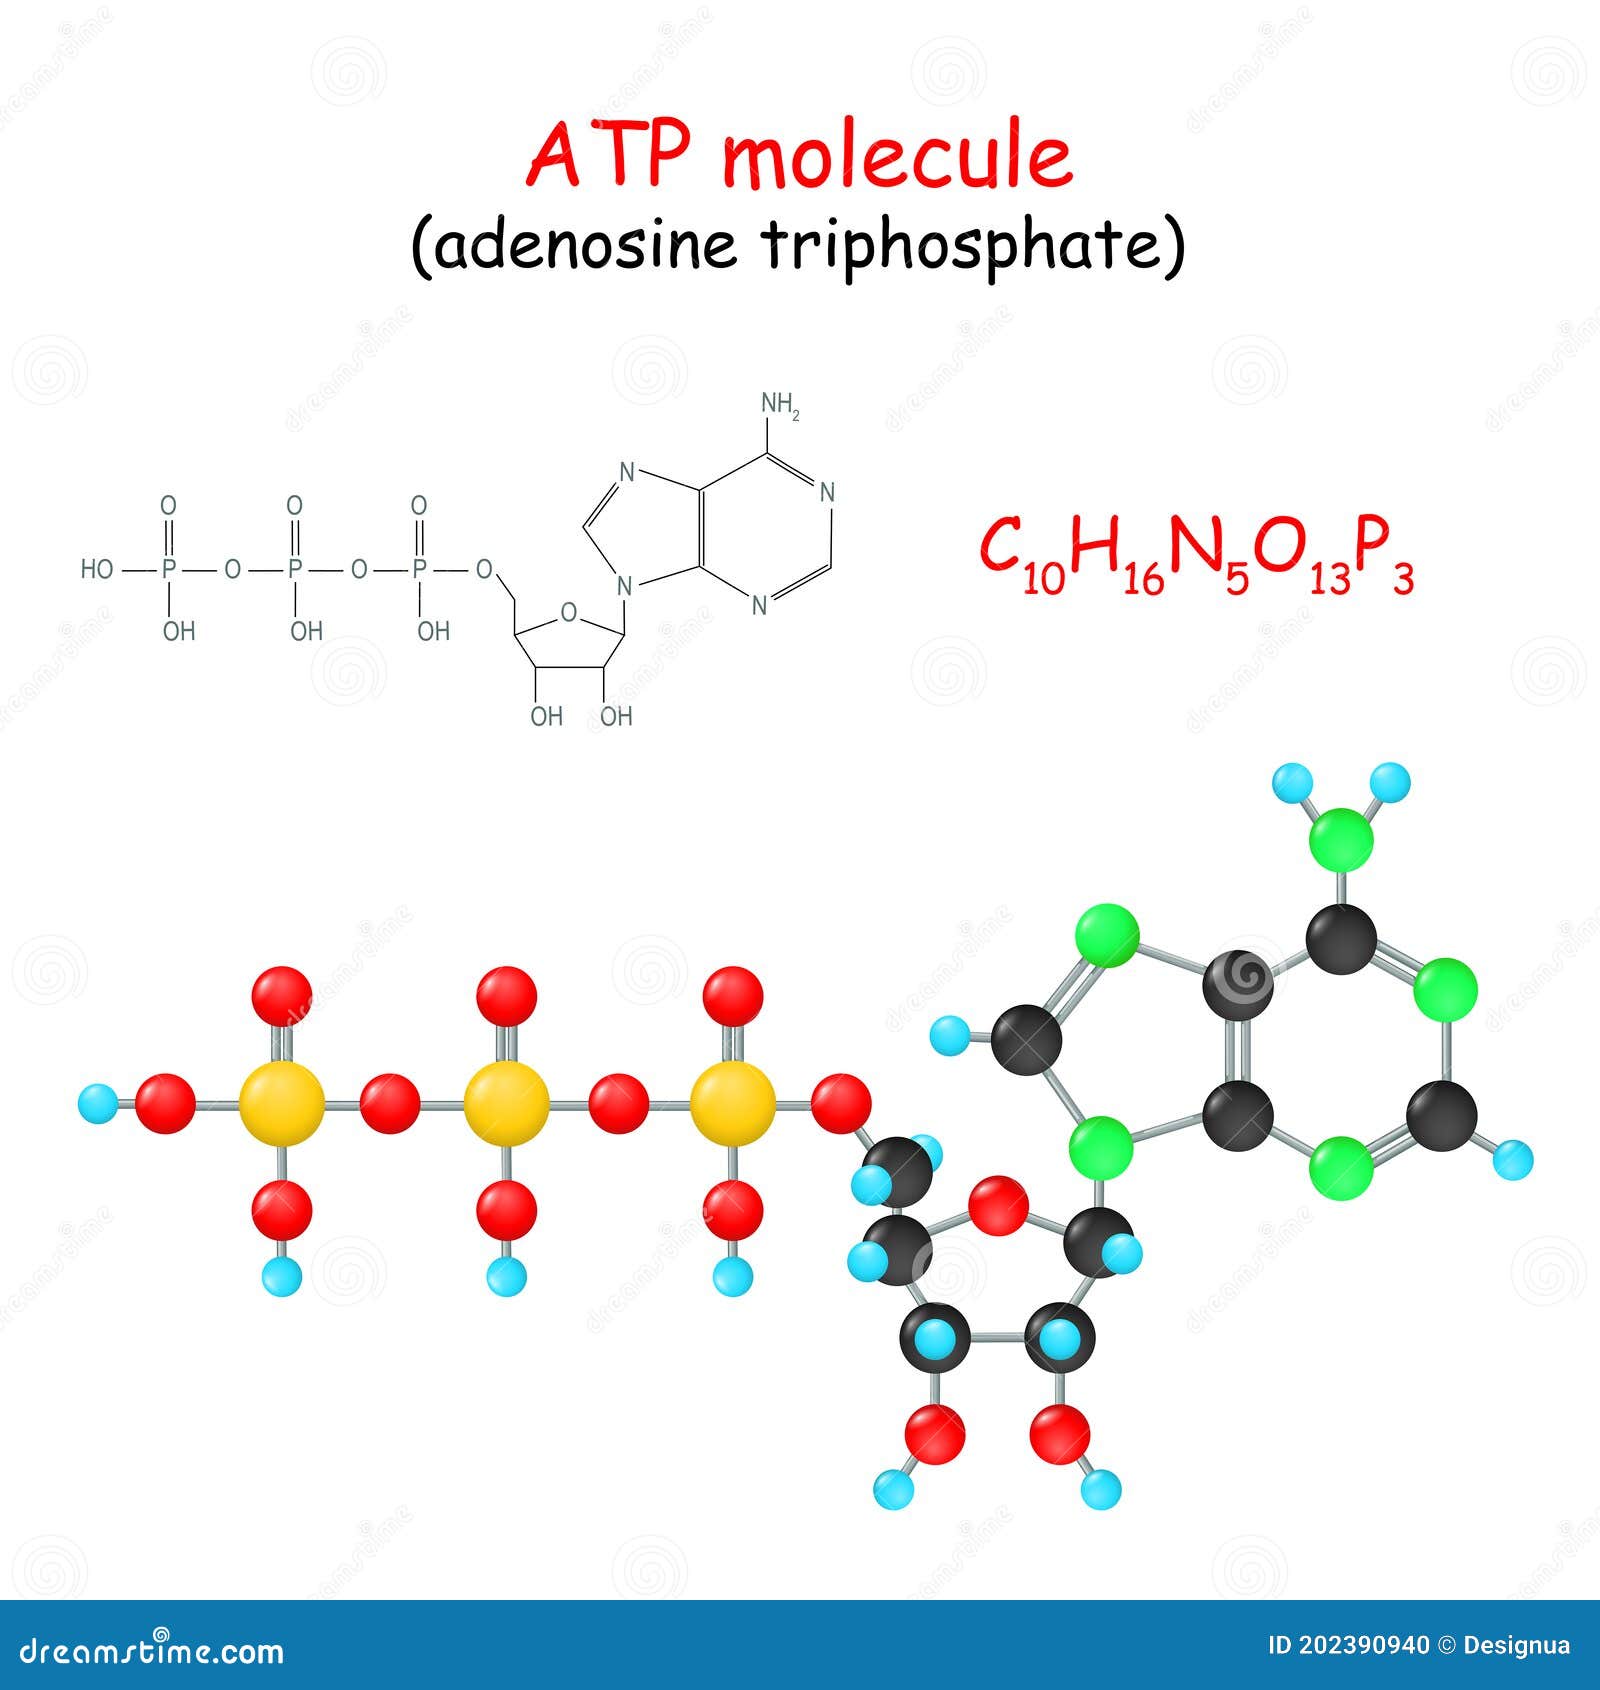 atp adenosine triphosphate molecule